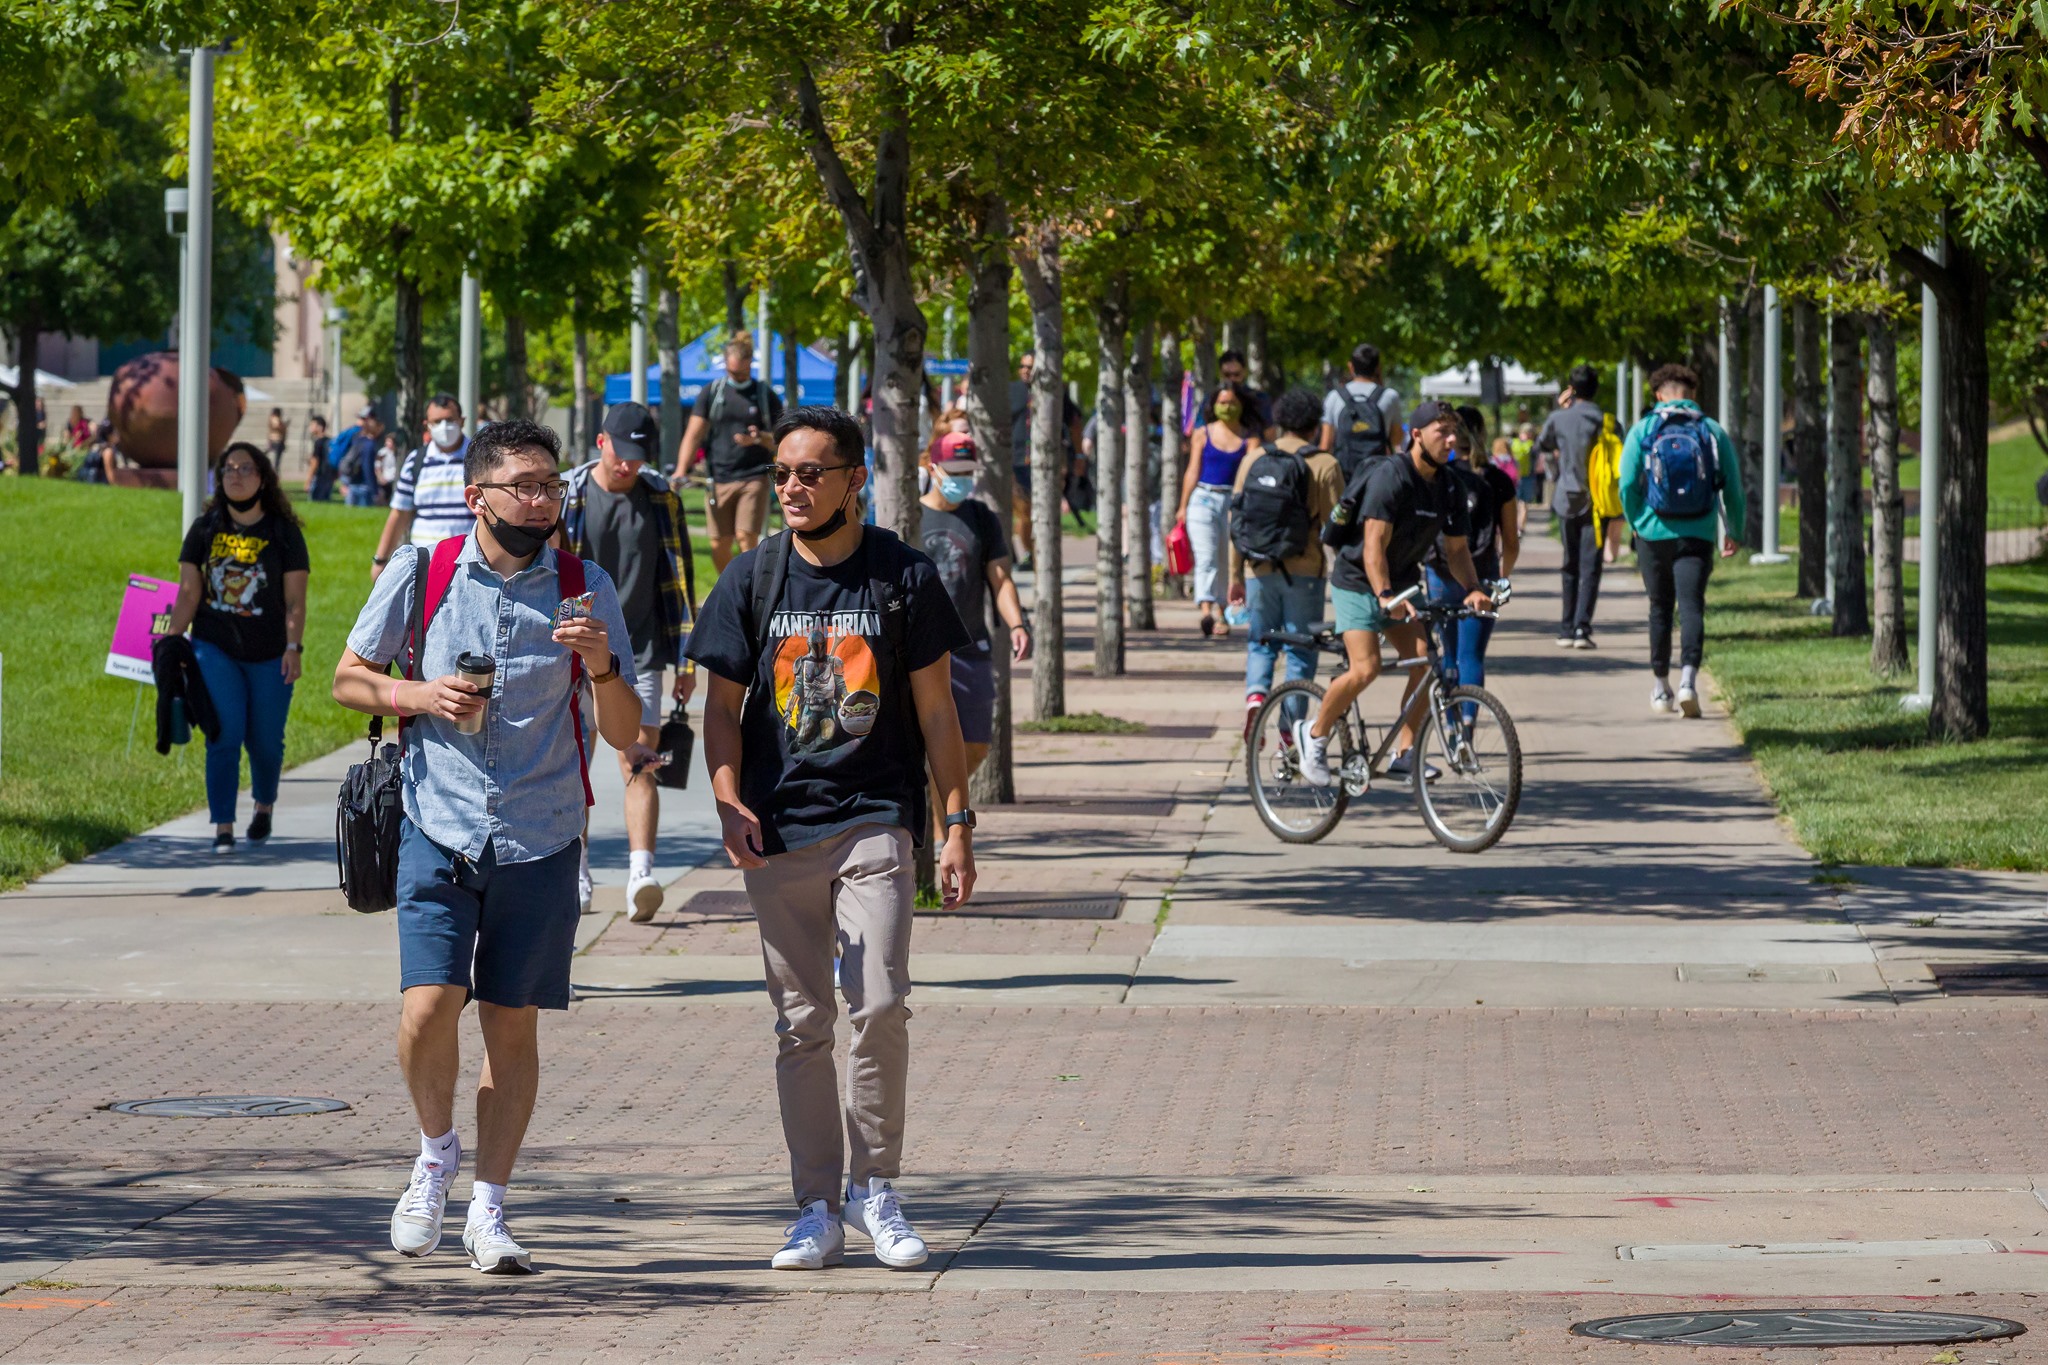 University of Colorado Denver students walking